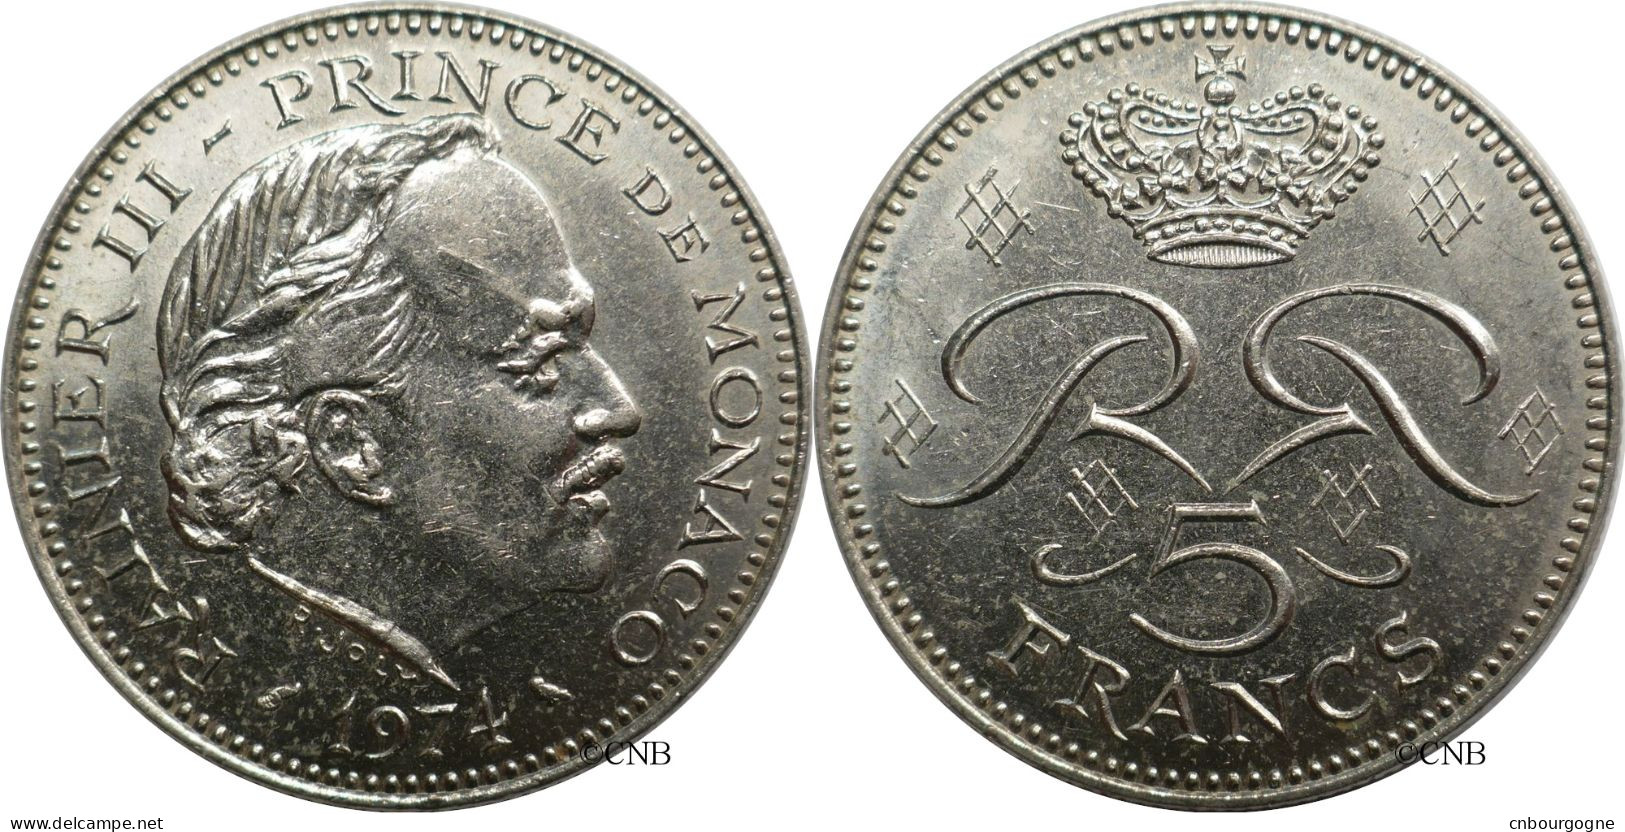 Monaco - Principauté - Rainier III - 5 Francs 1974 - SUP/AU55 - Mon6649 - 1960-2001 Nieuwe Frank